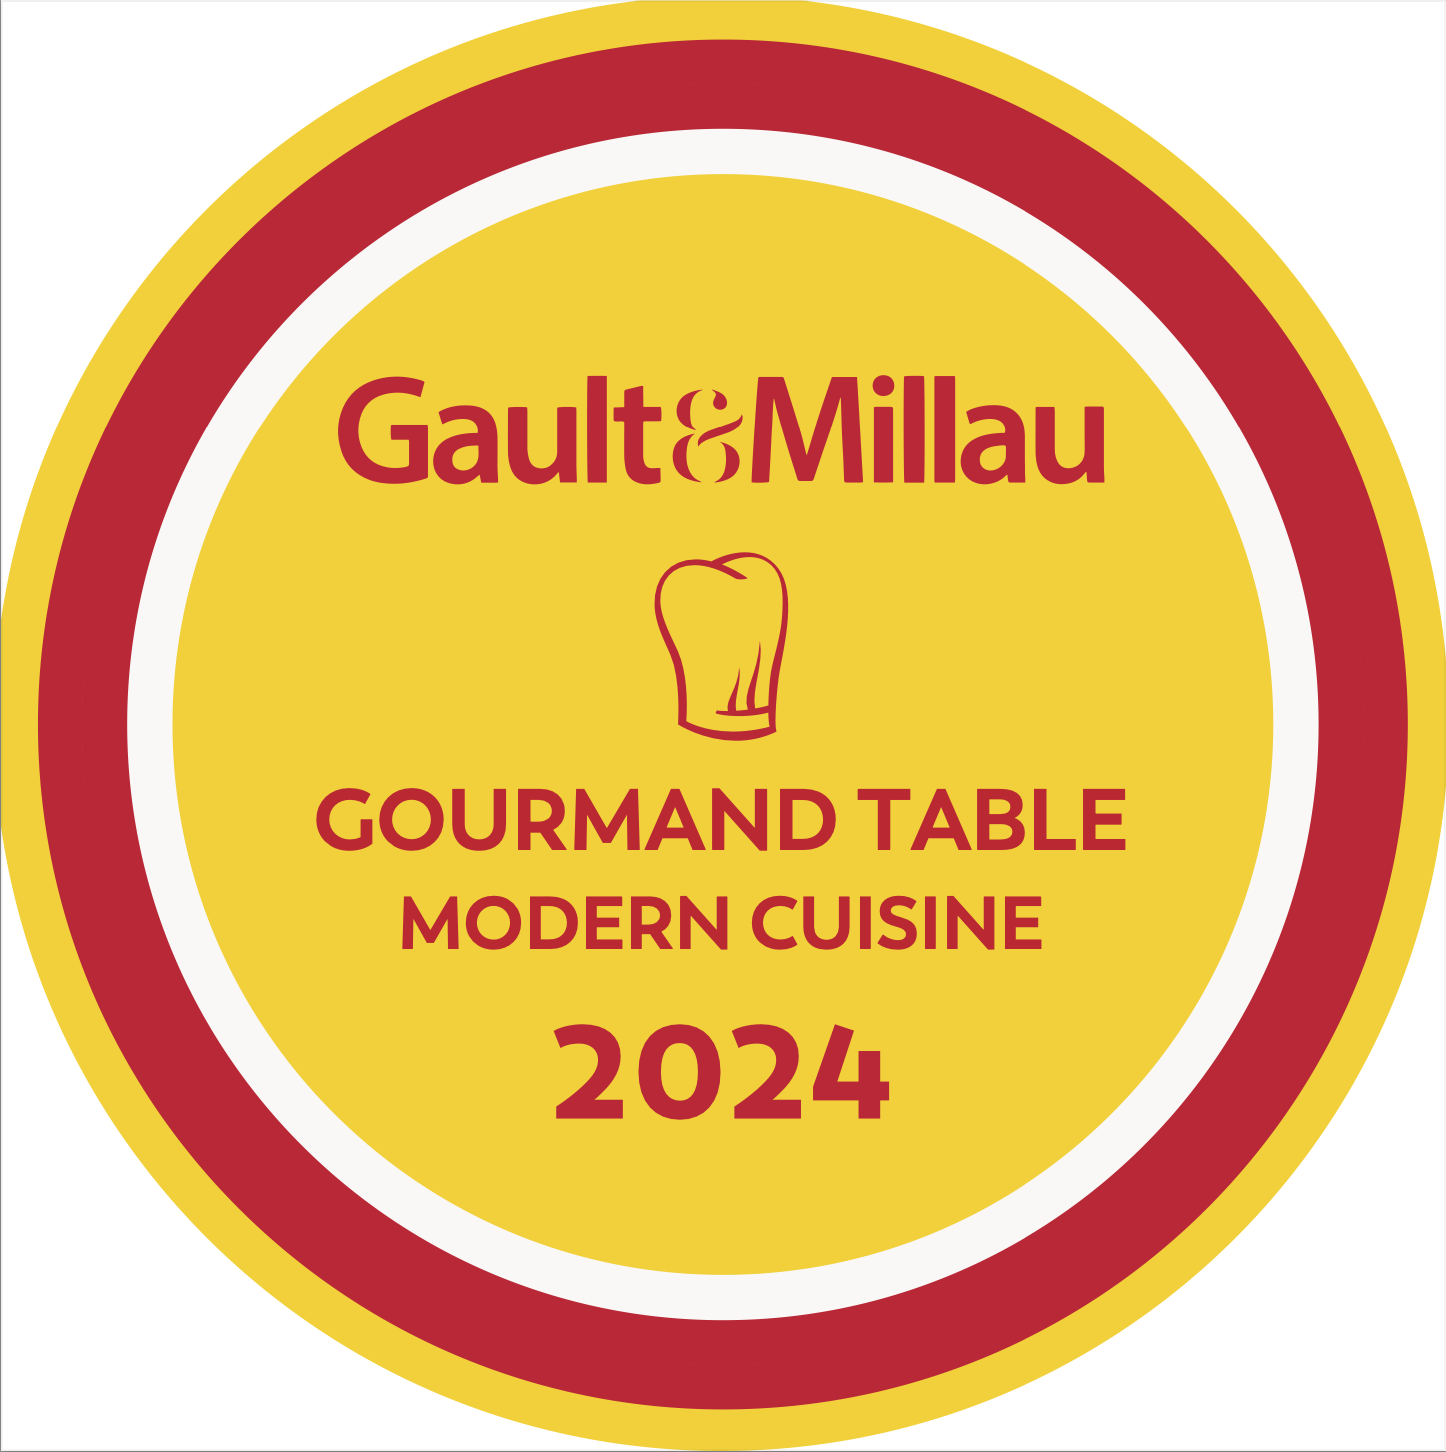 Gault&Millau GOURMAND TABLE MODERN CUISINE 2024